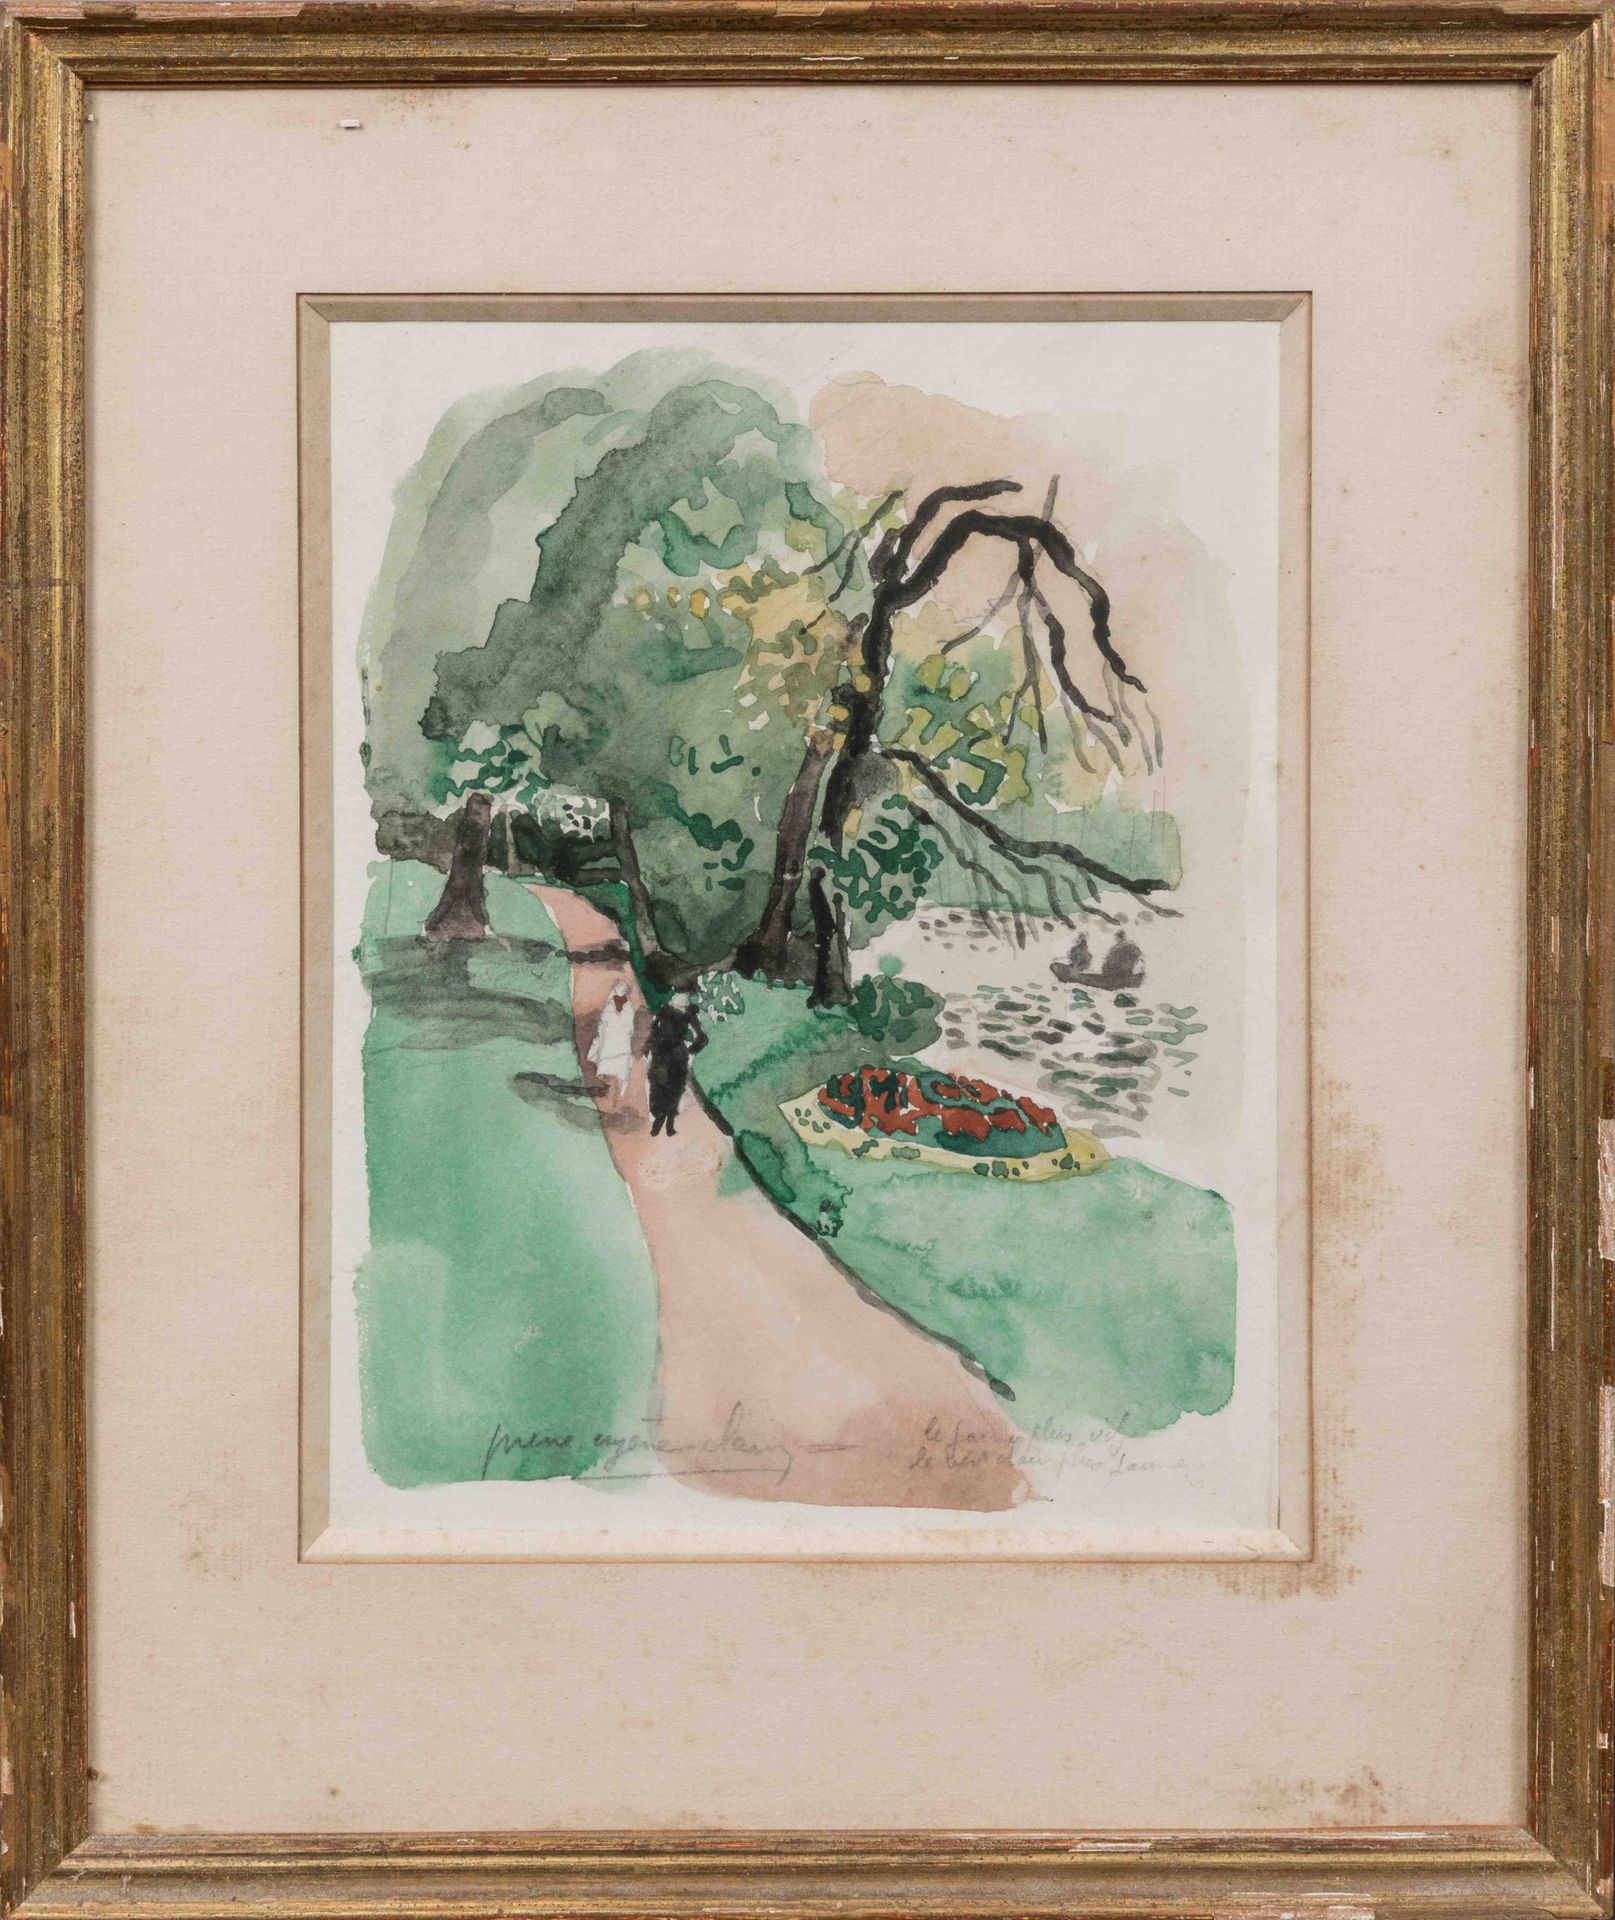 Null 皮埃尔-欧仁-克莱林（1897年，坎布雷-1980年，索里尼昂-夏尼）。

在湖边散步。

水彩和木炭画，左下有签名，右下有注释 "le jaune &hellip;